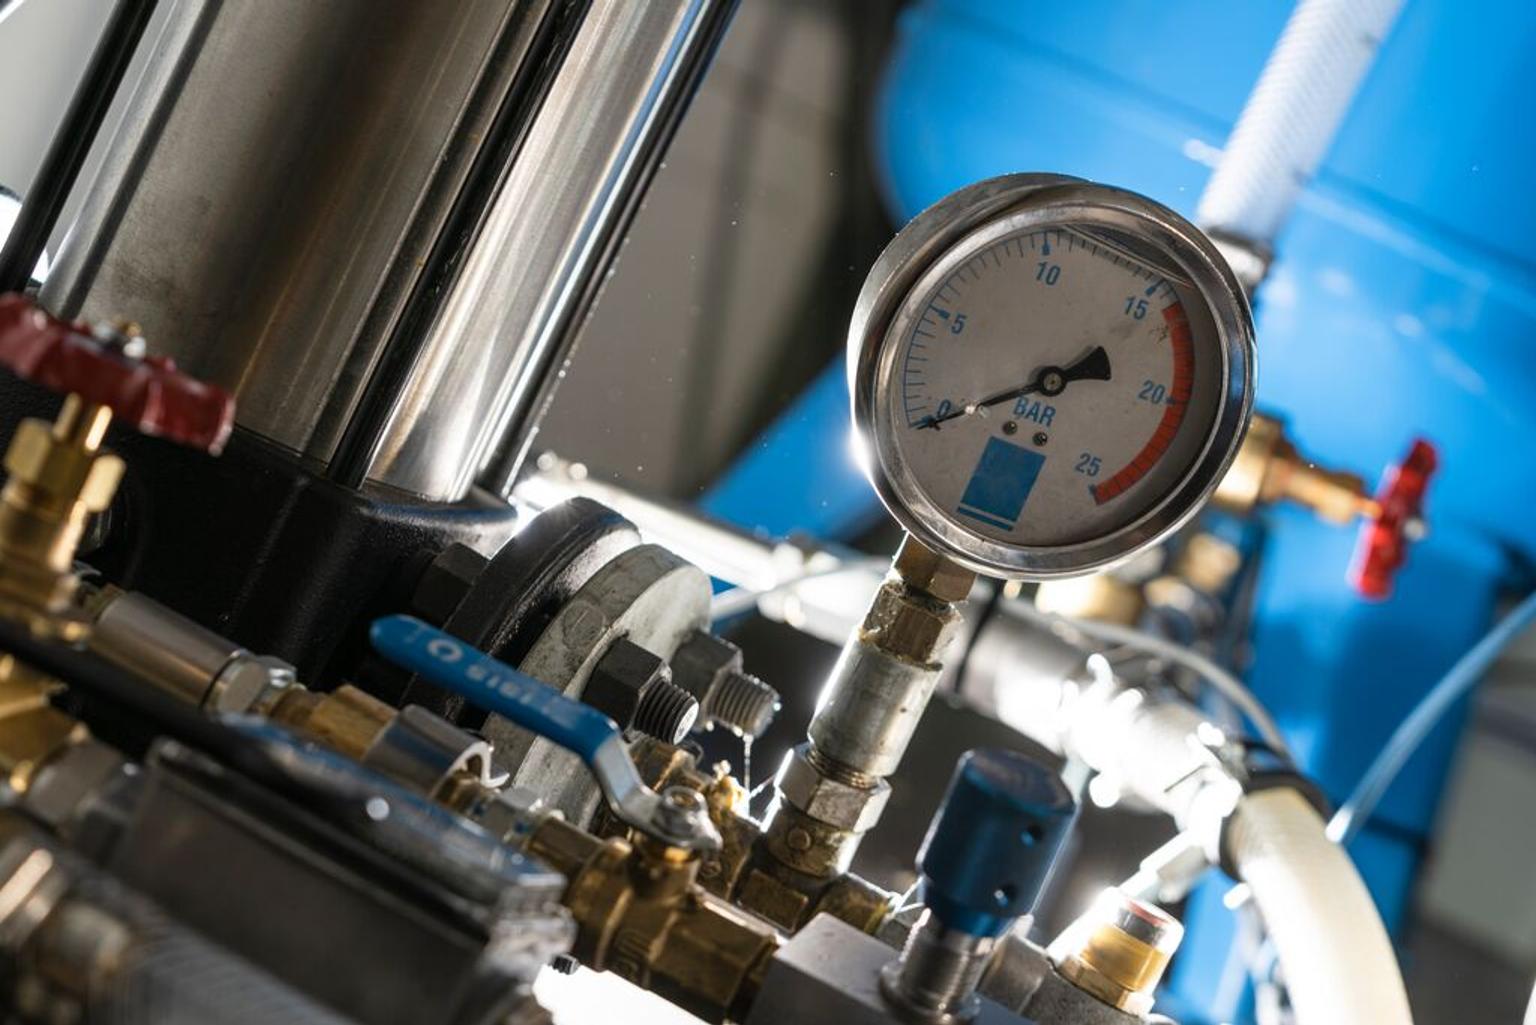 Hydrogen compressor against a blue background